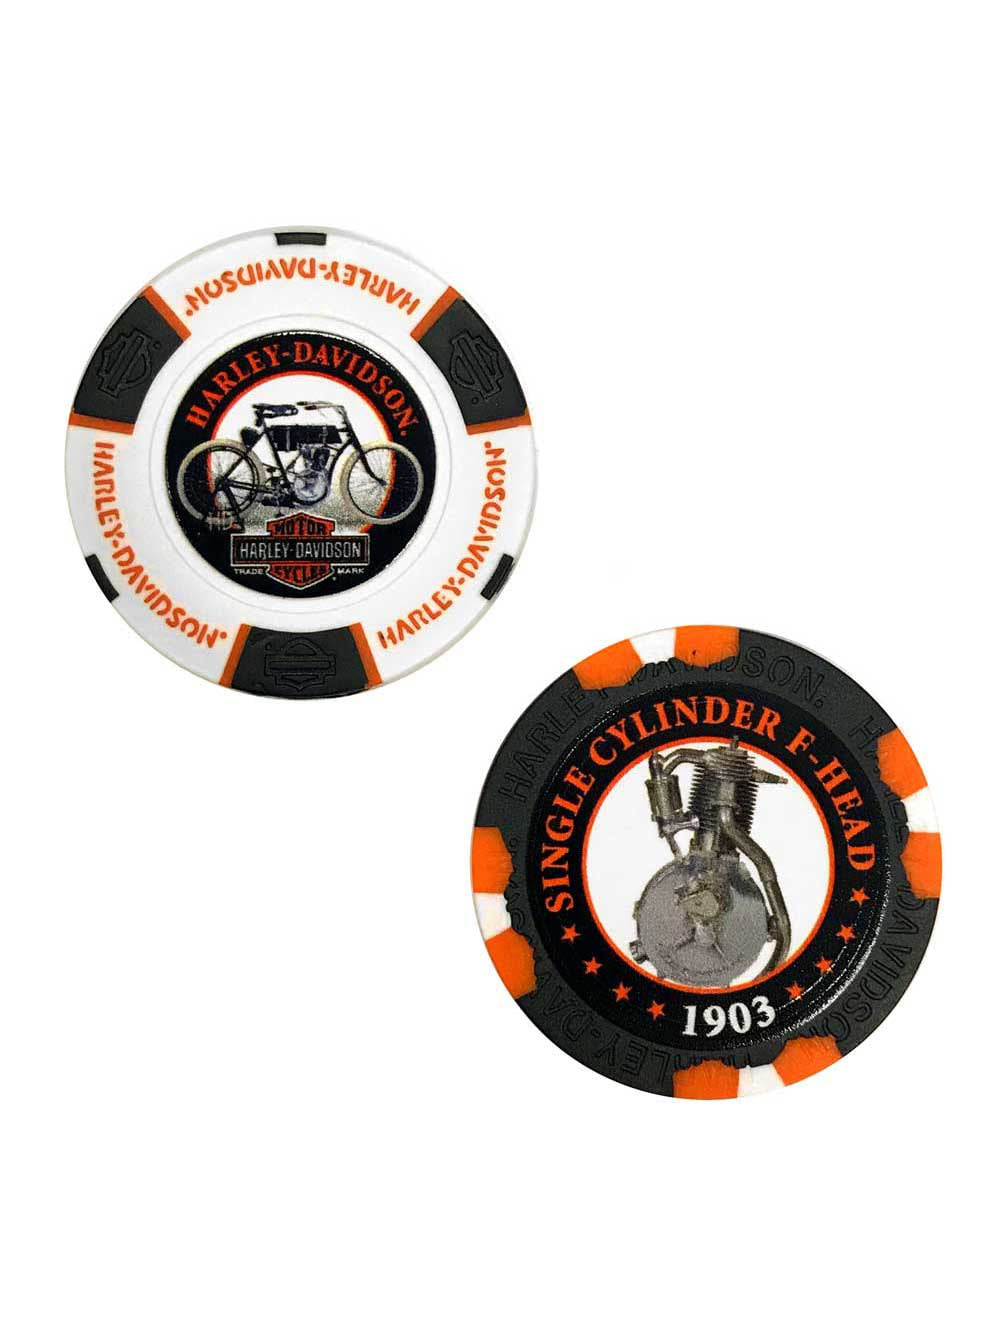 Henderson HD ~ Henderson Details about   Harley Davidson Poker Chip~ Black/White Nevada 